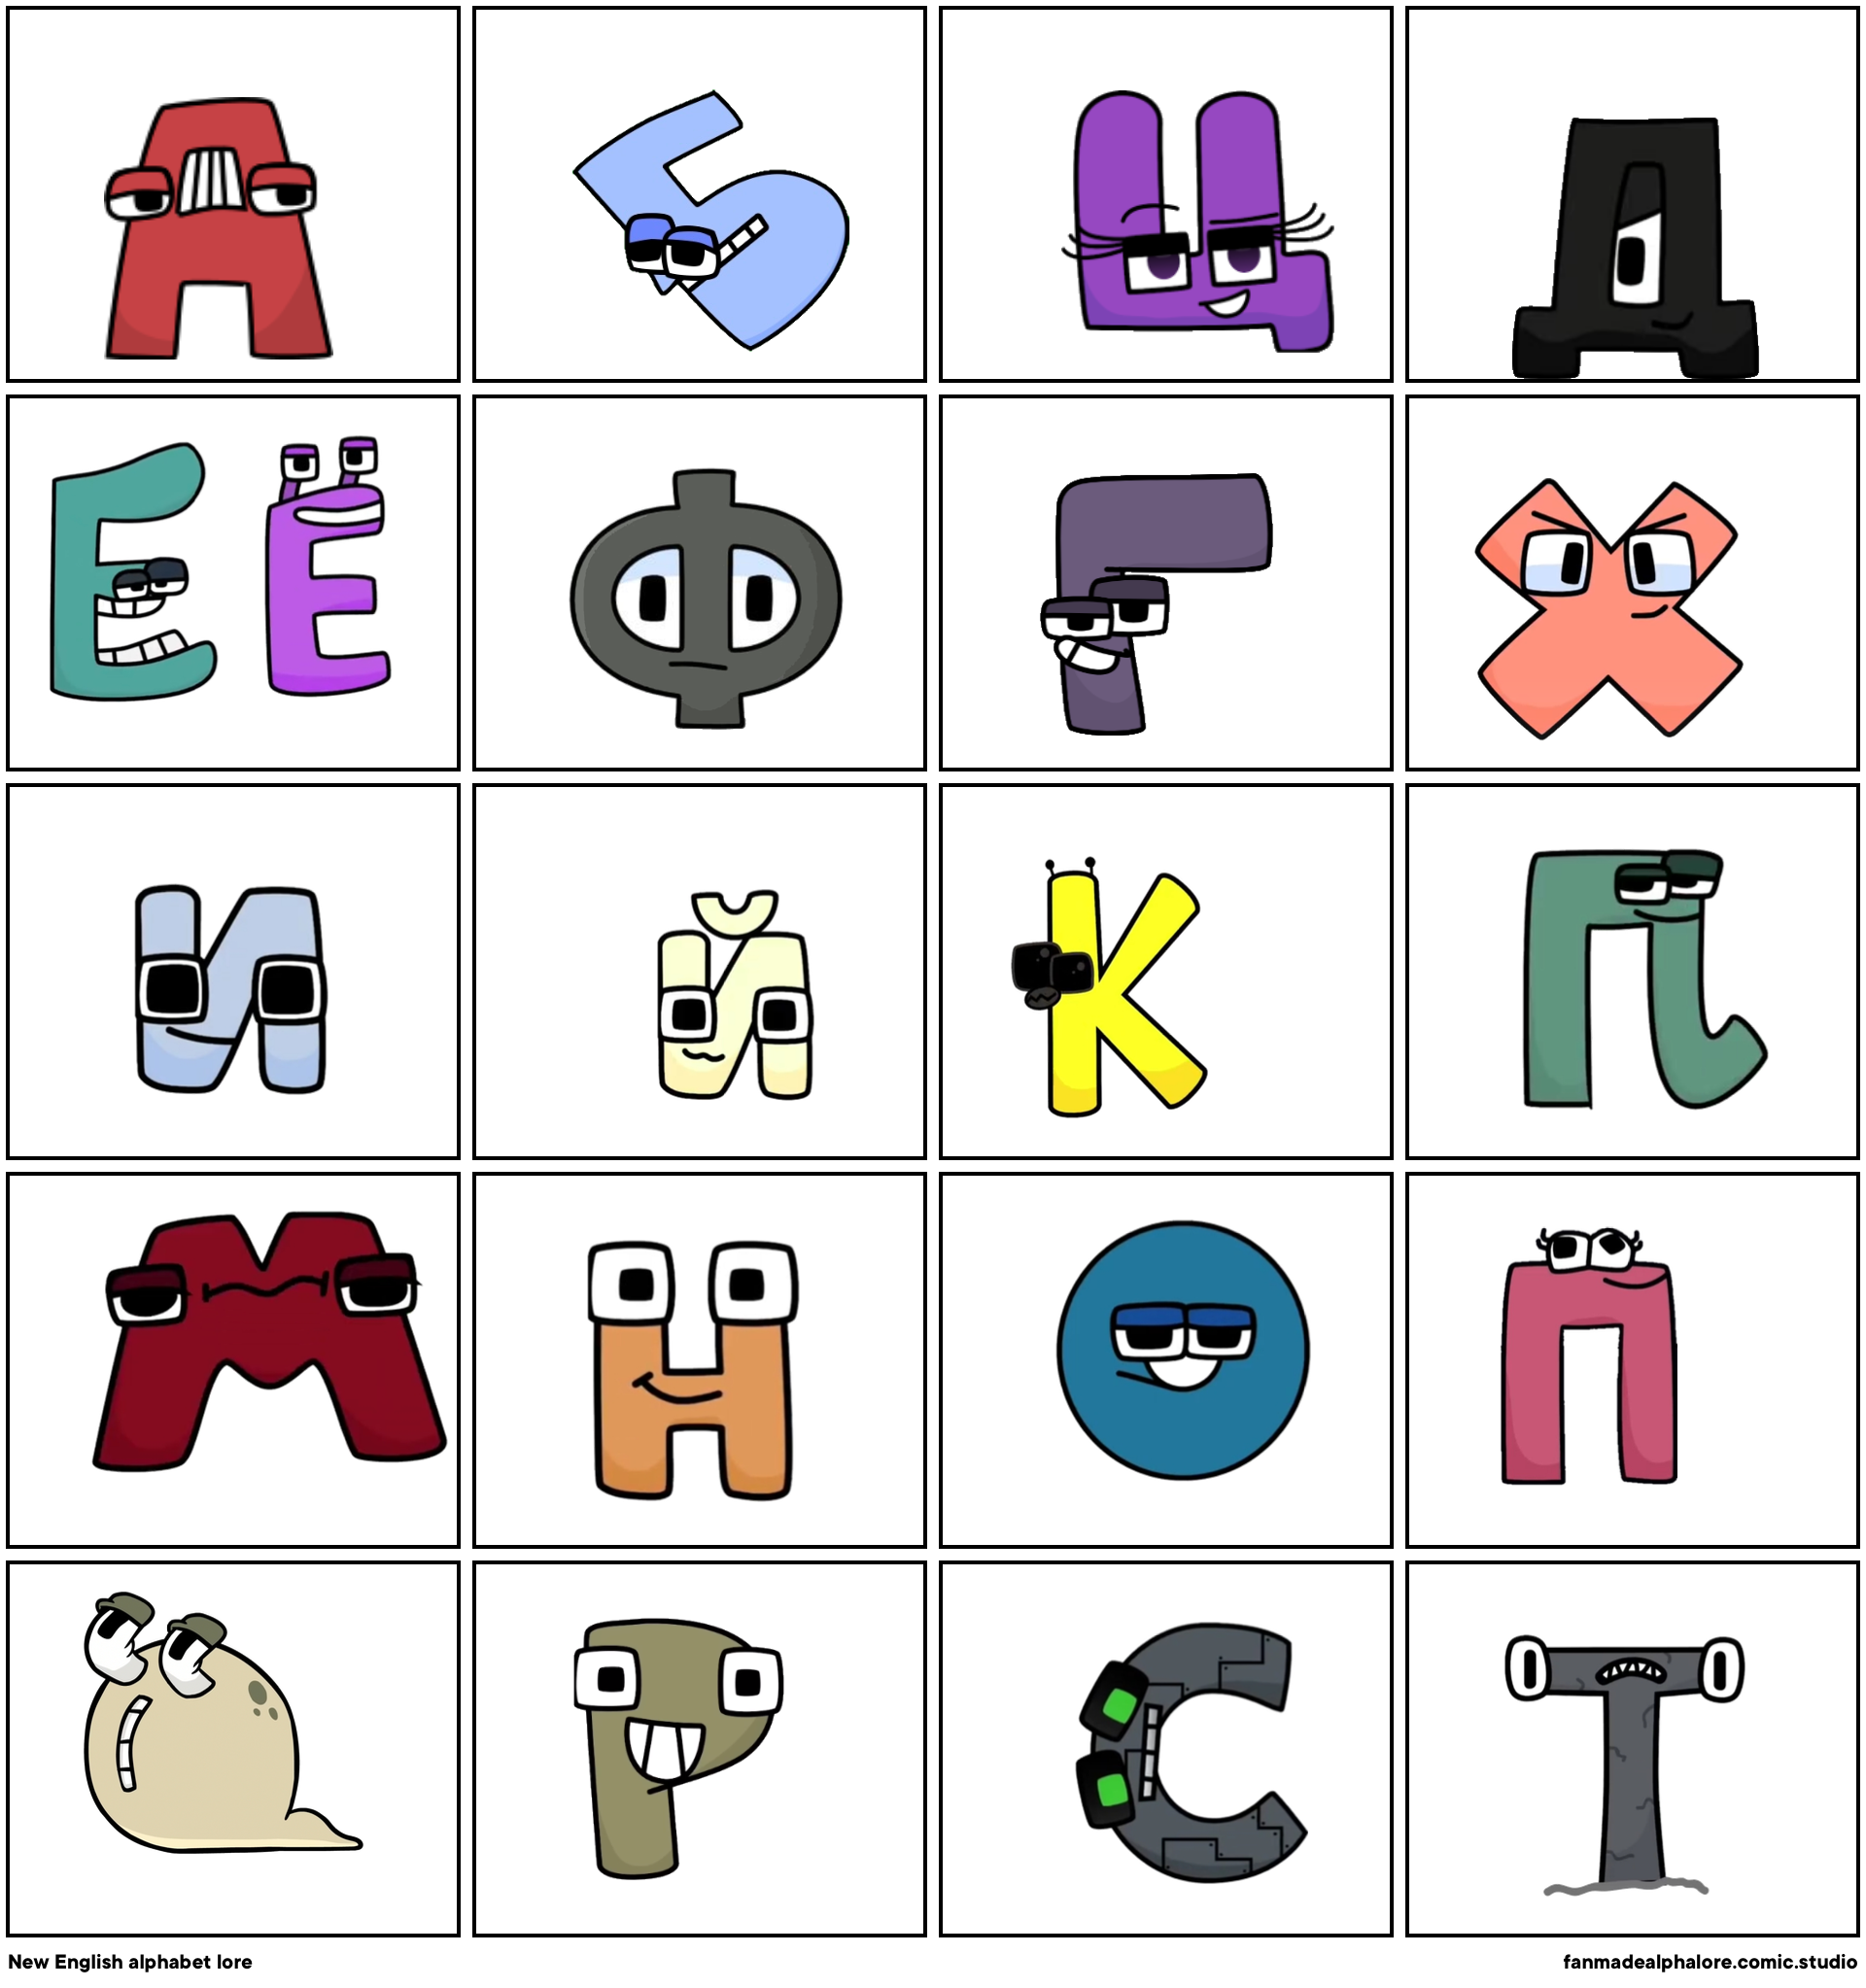 New English alphabet lore